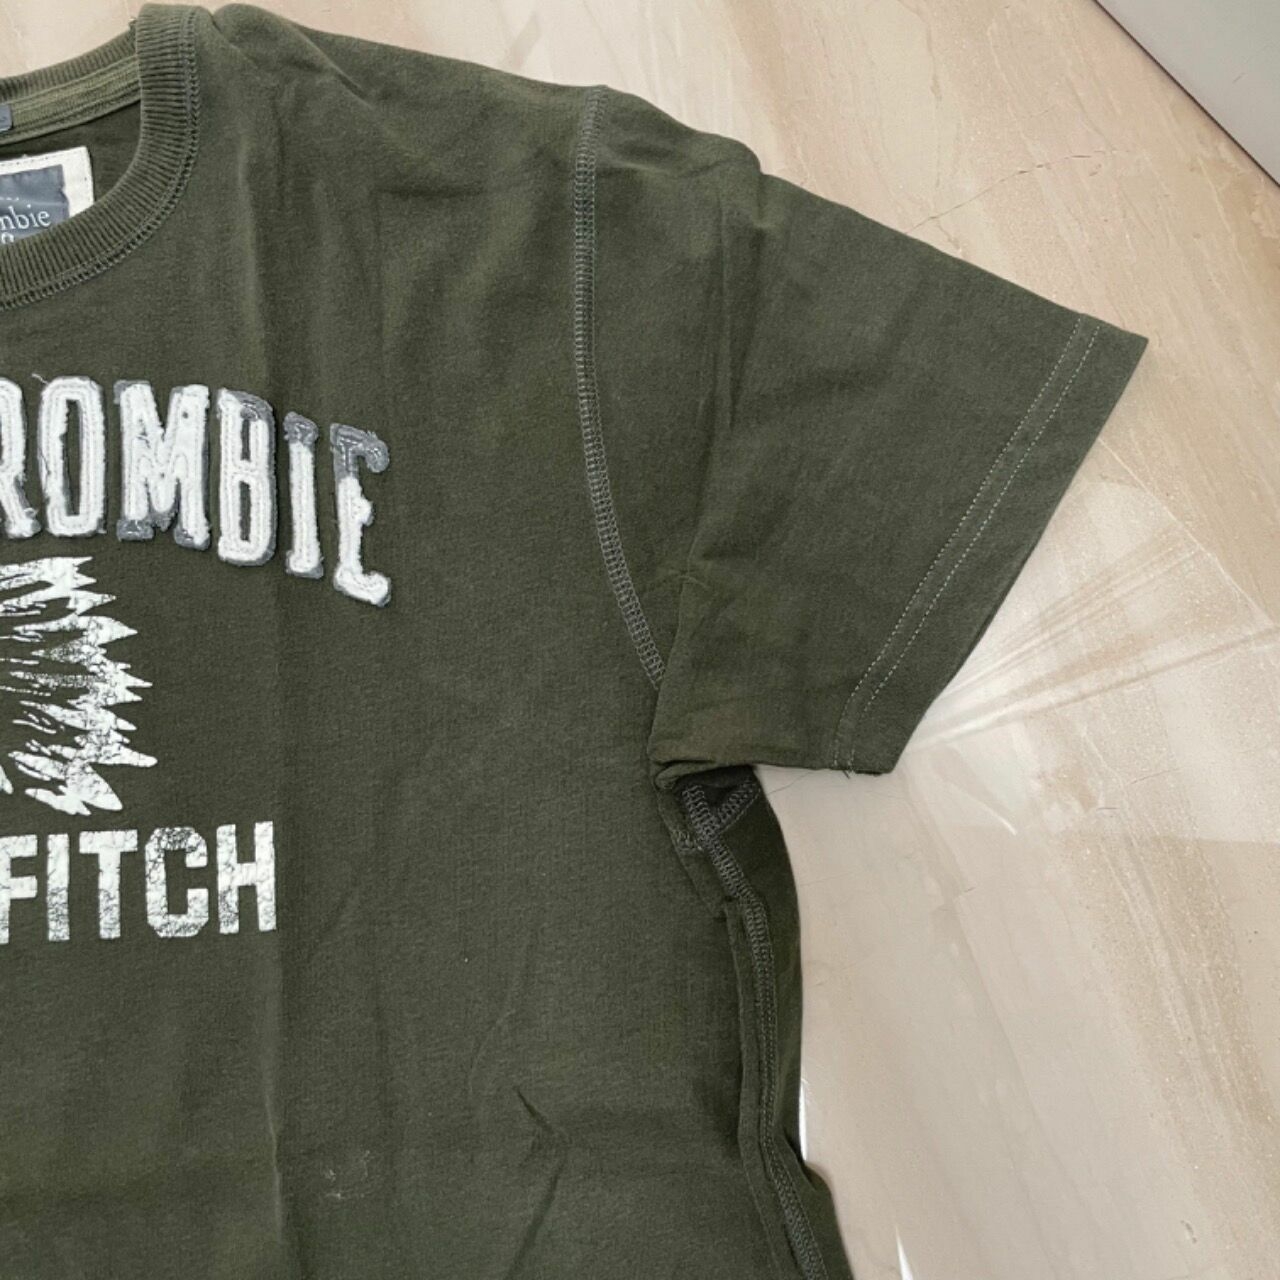 Abercrombie & Fitch Green Kaos